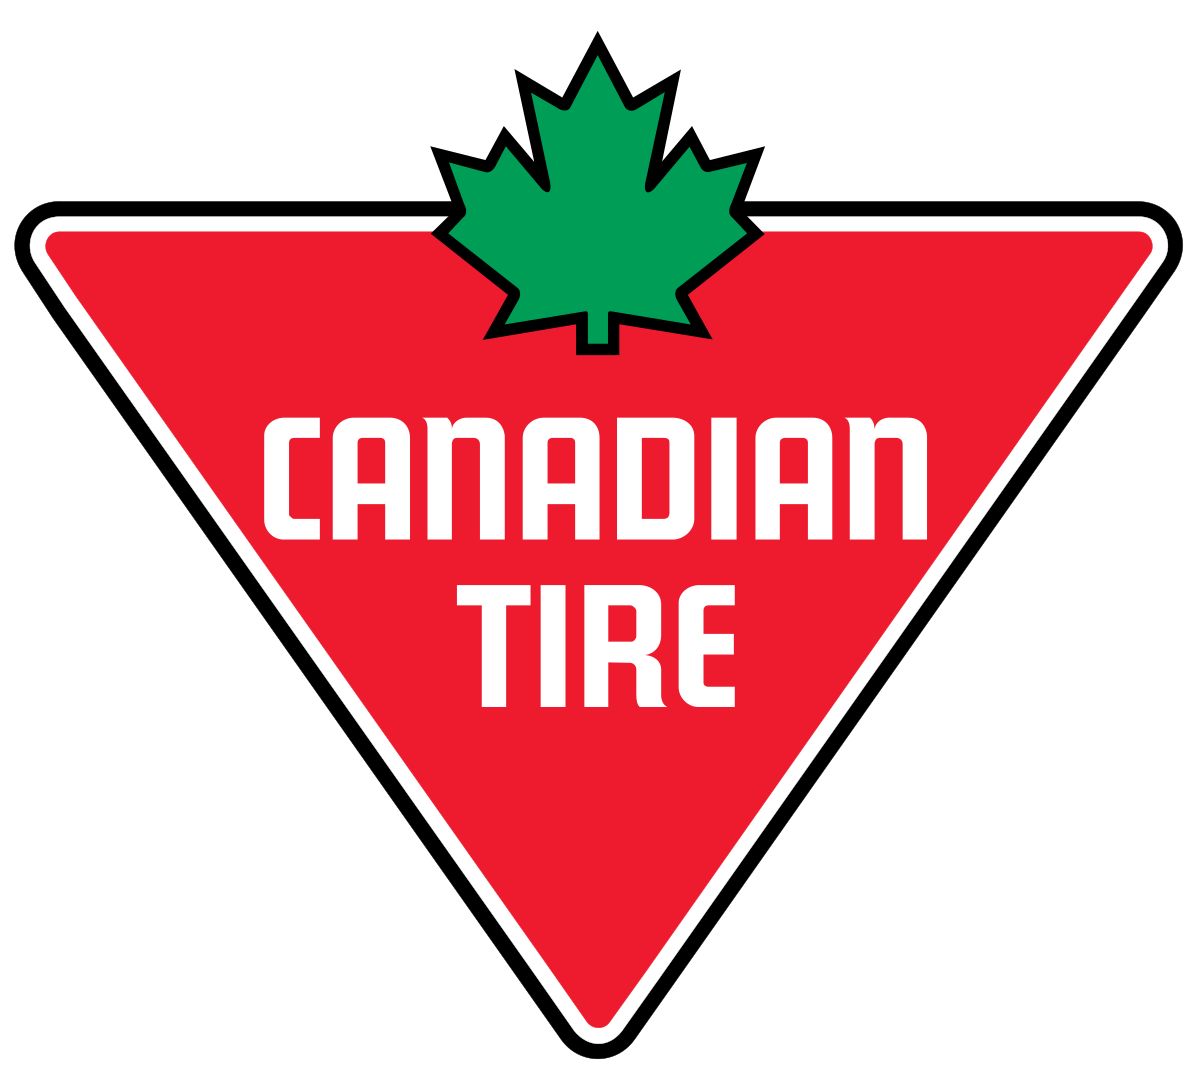 Canadian tire logo. Svg